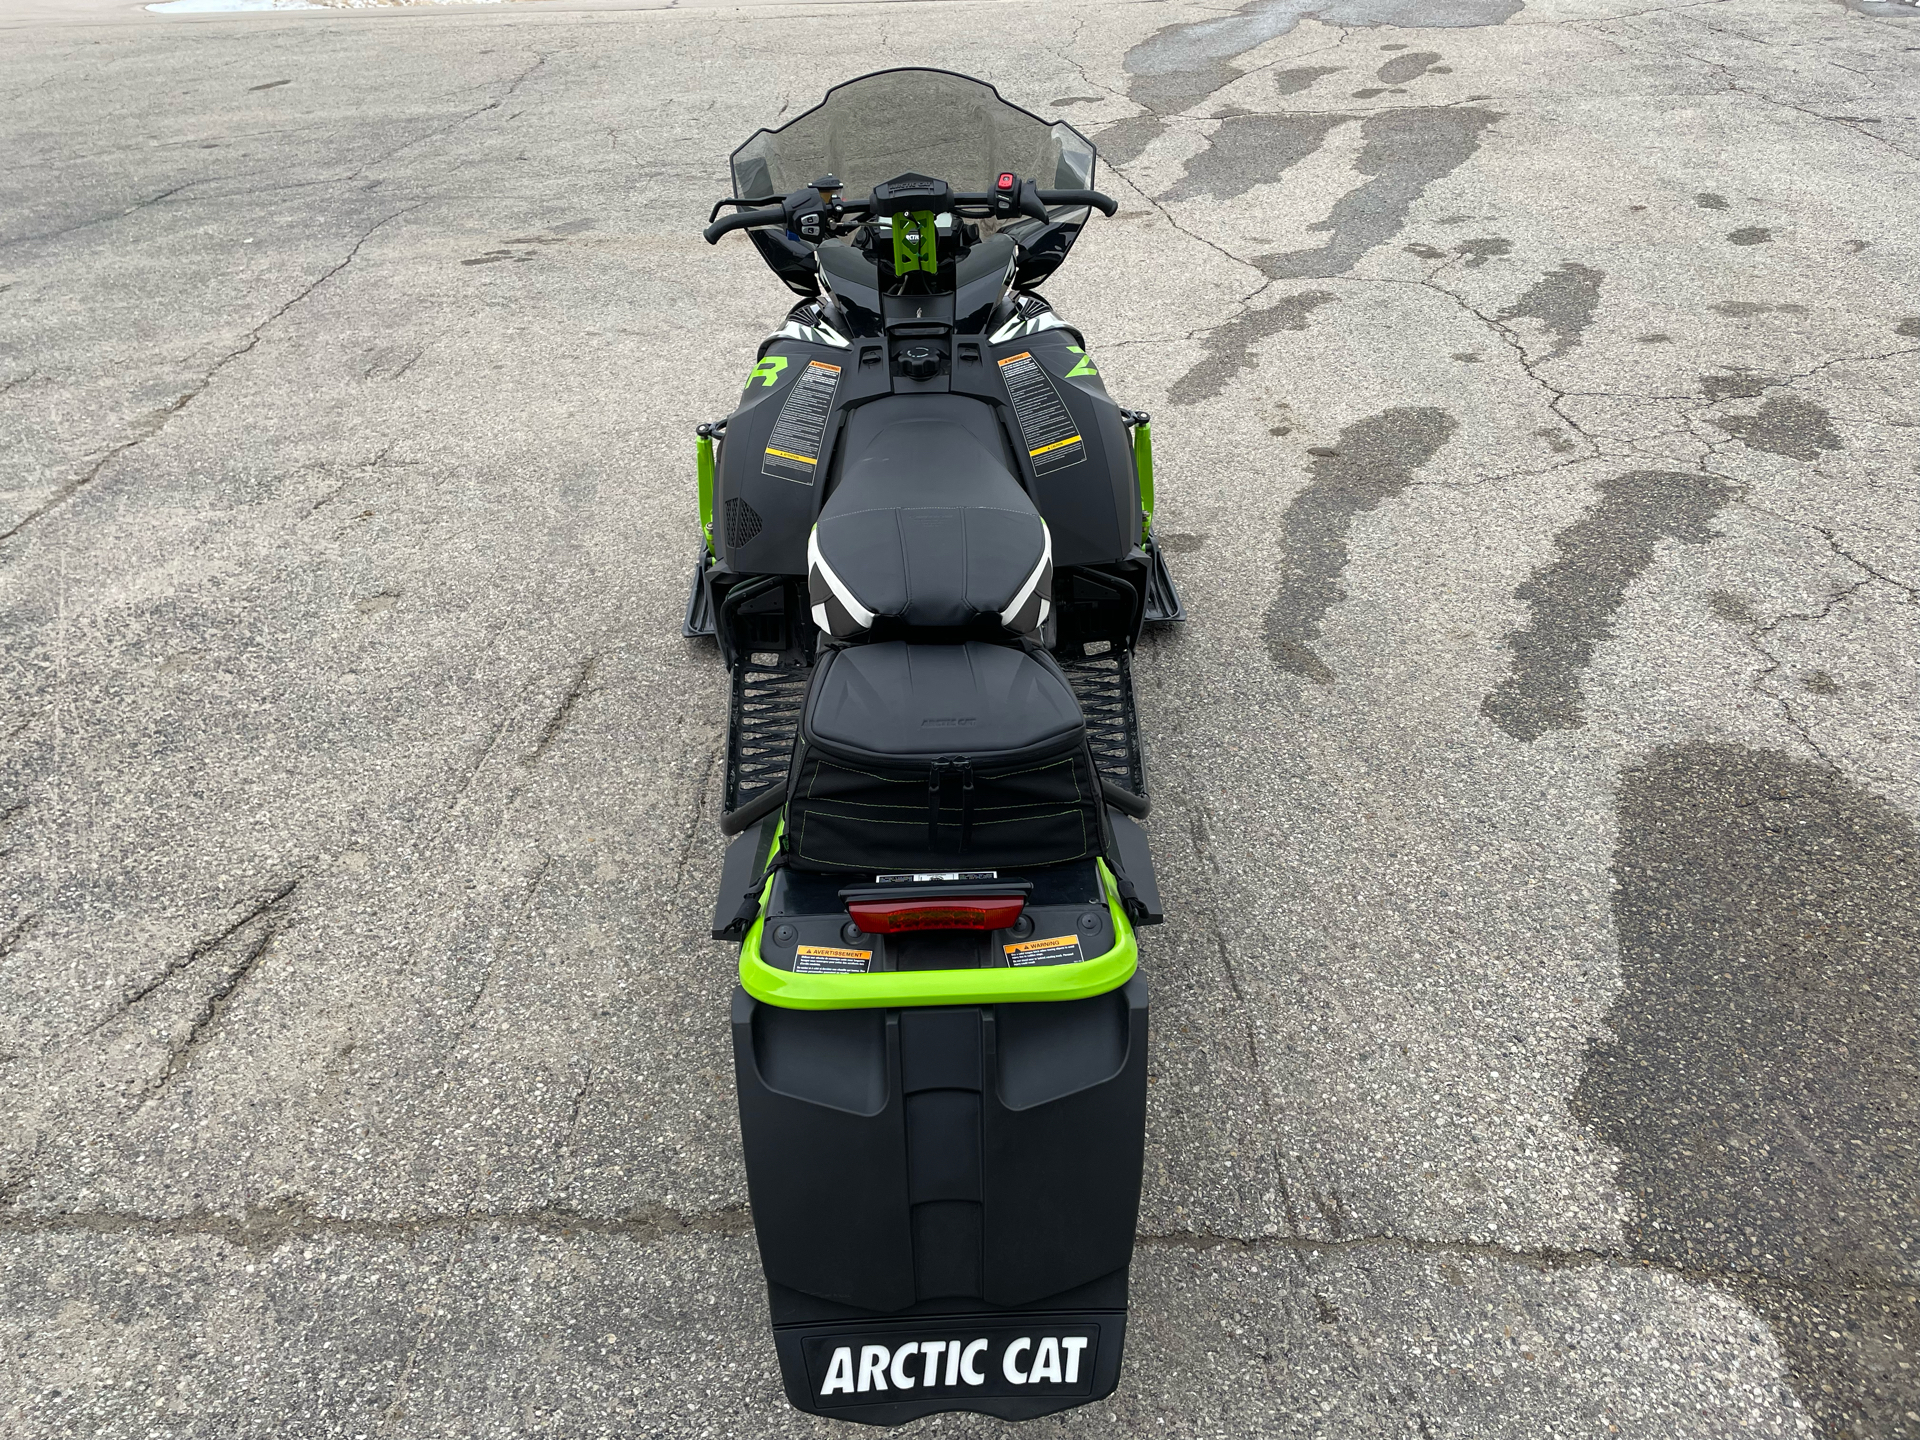 2018 Arctic Cat ZR 6000 Limited ES 137 in Edgerton, Wisconsin - Photo 6